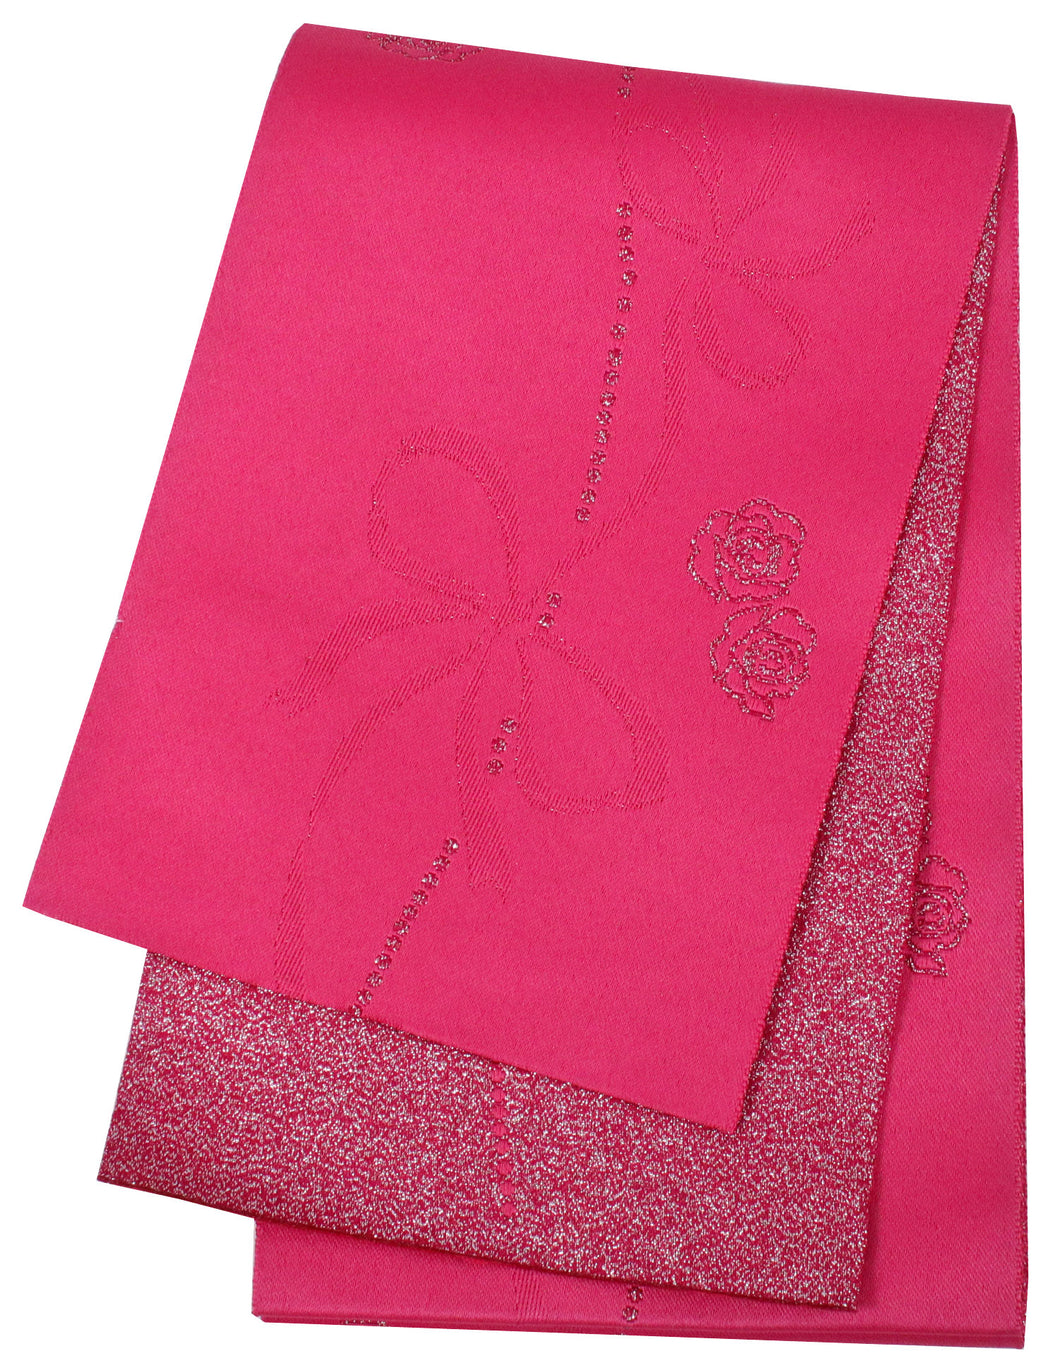 Women's Hanhaba-Obi for Japanese Traditional Kimono - Pink Rose Ribbon